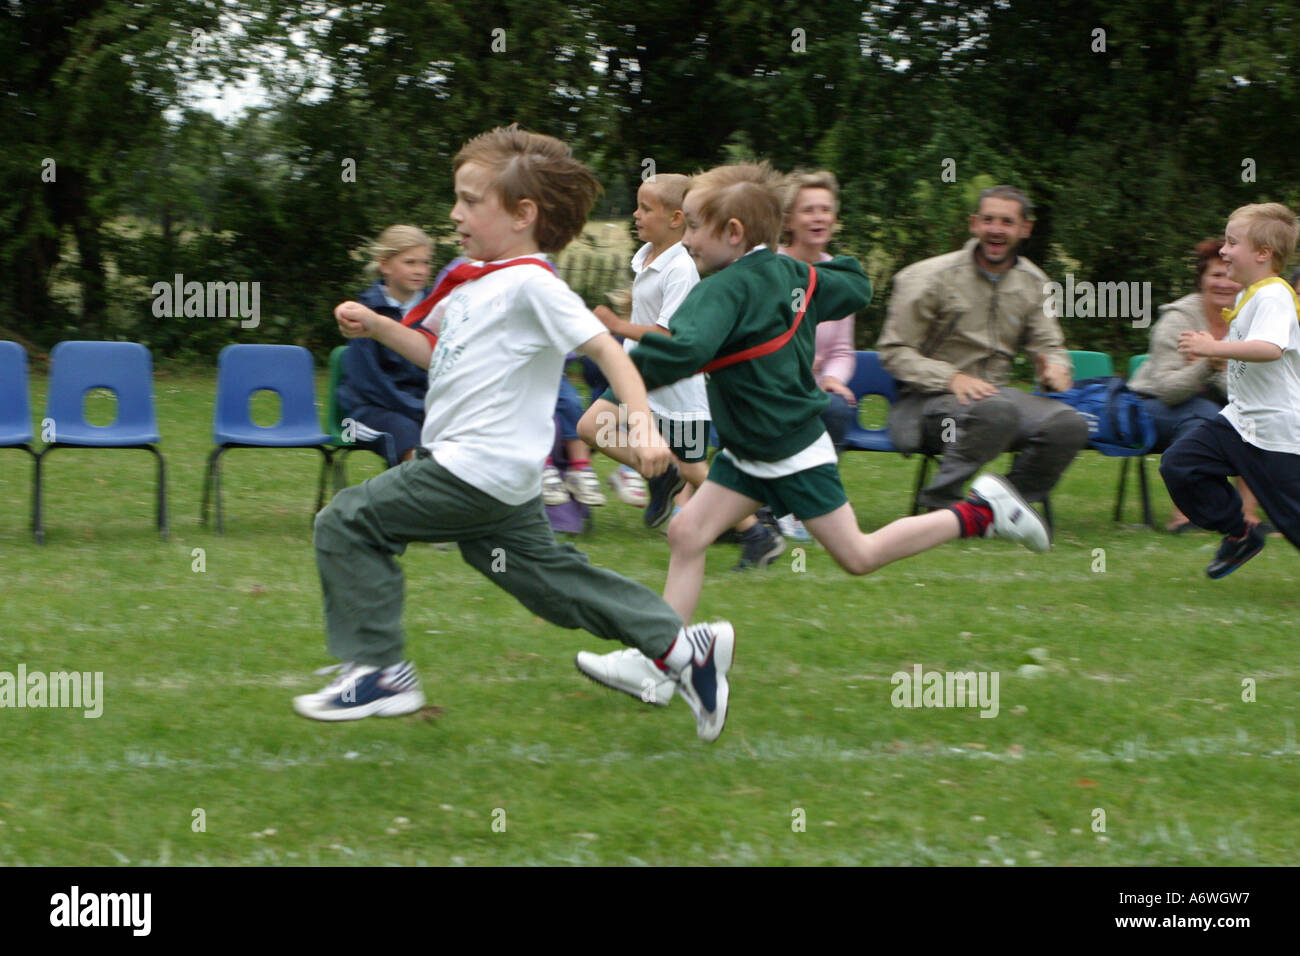 Primary school sports day race Stock Photo